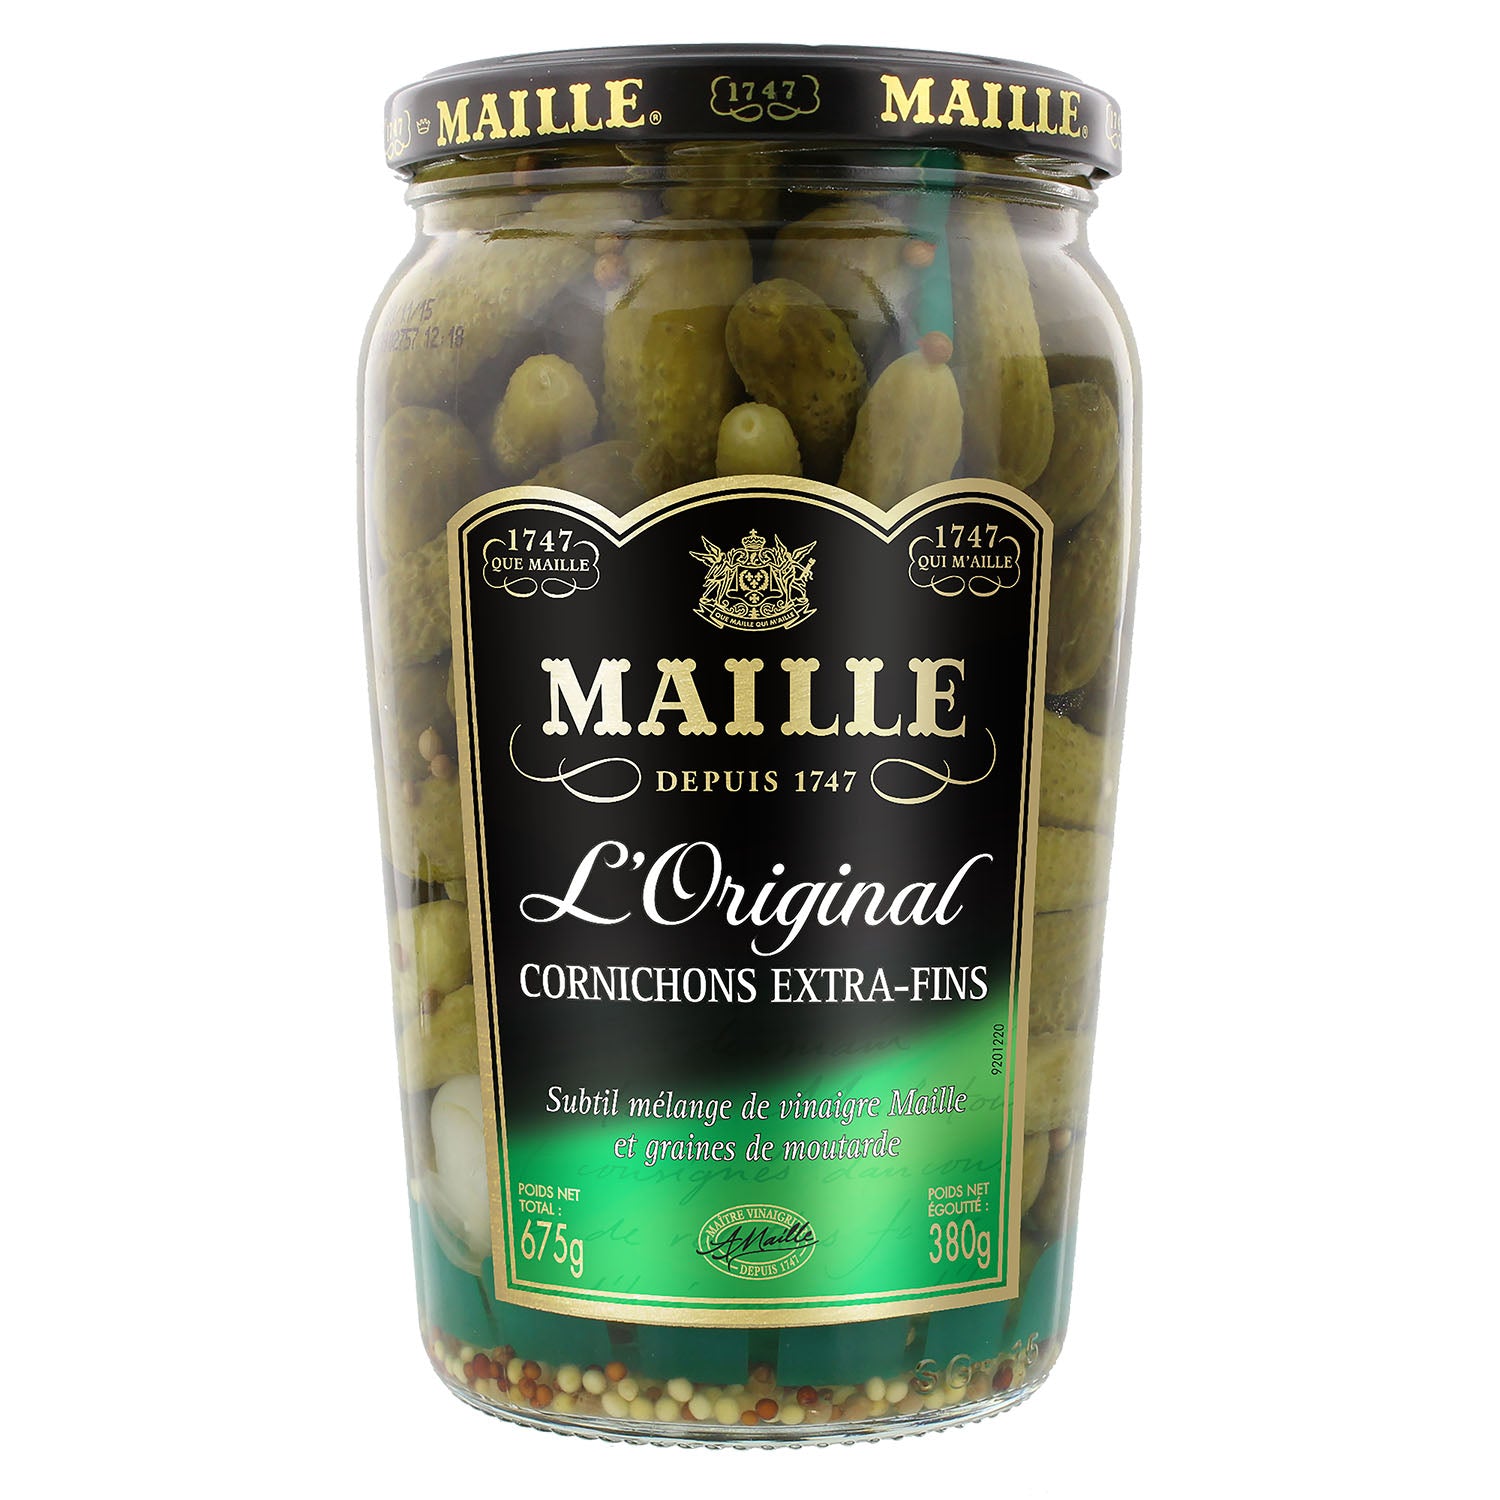  Maille Pickles Cornichons Original The perfect